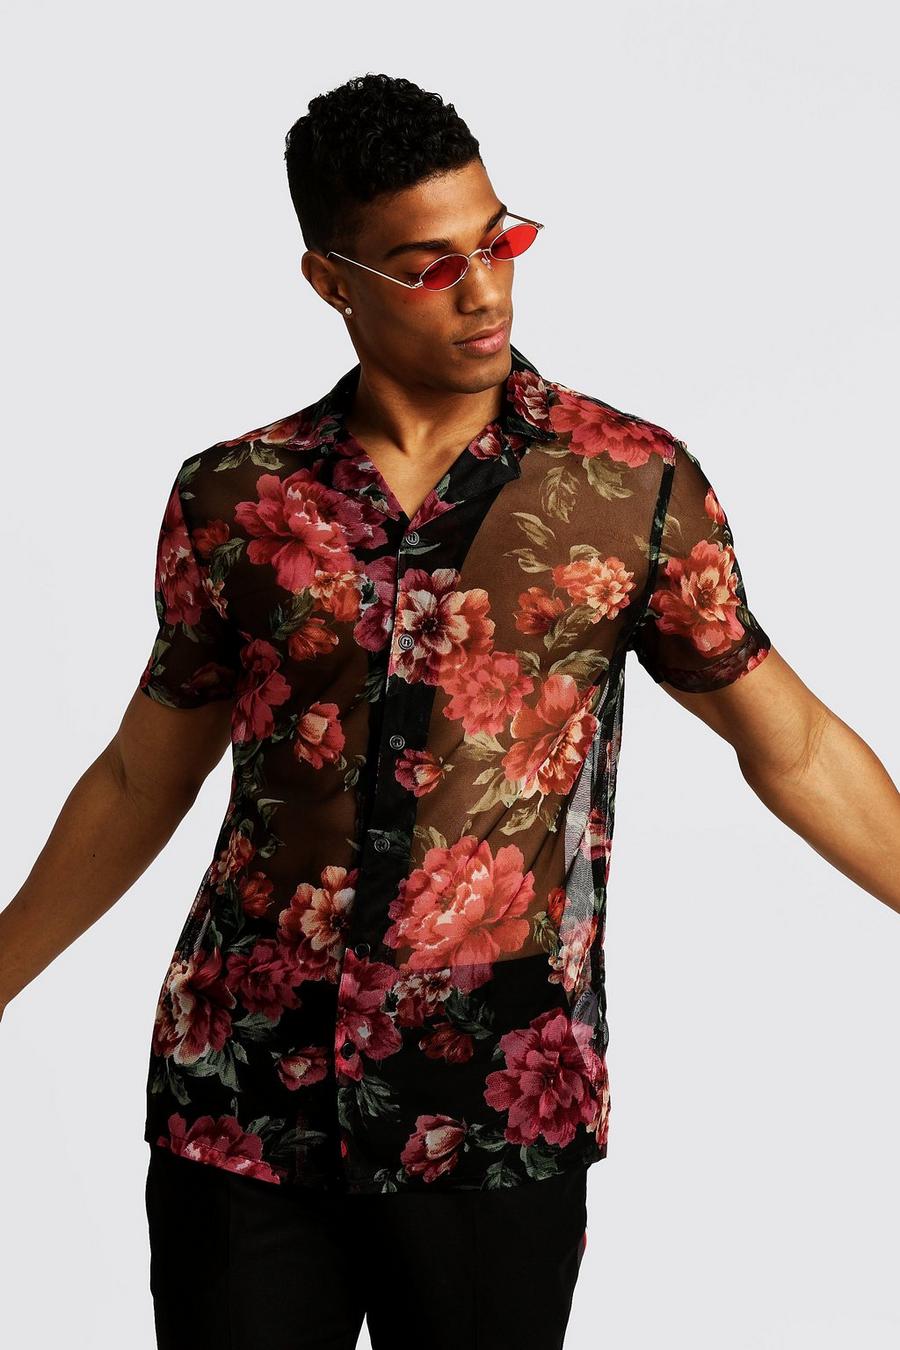 Mfasica Mens Summer Button Oversized Floral Print Short Sleeve Tees Top Shirts